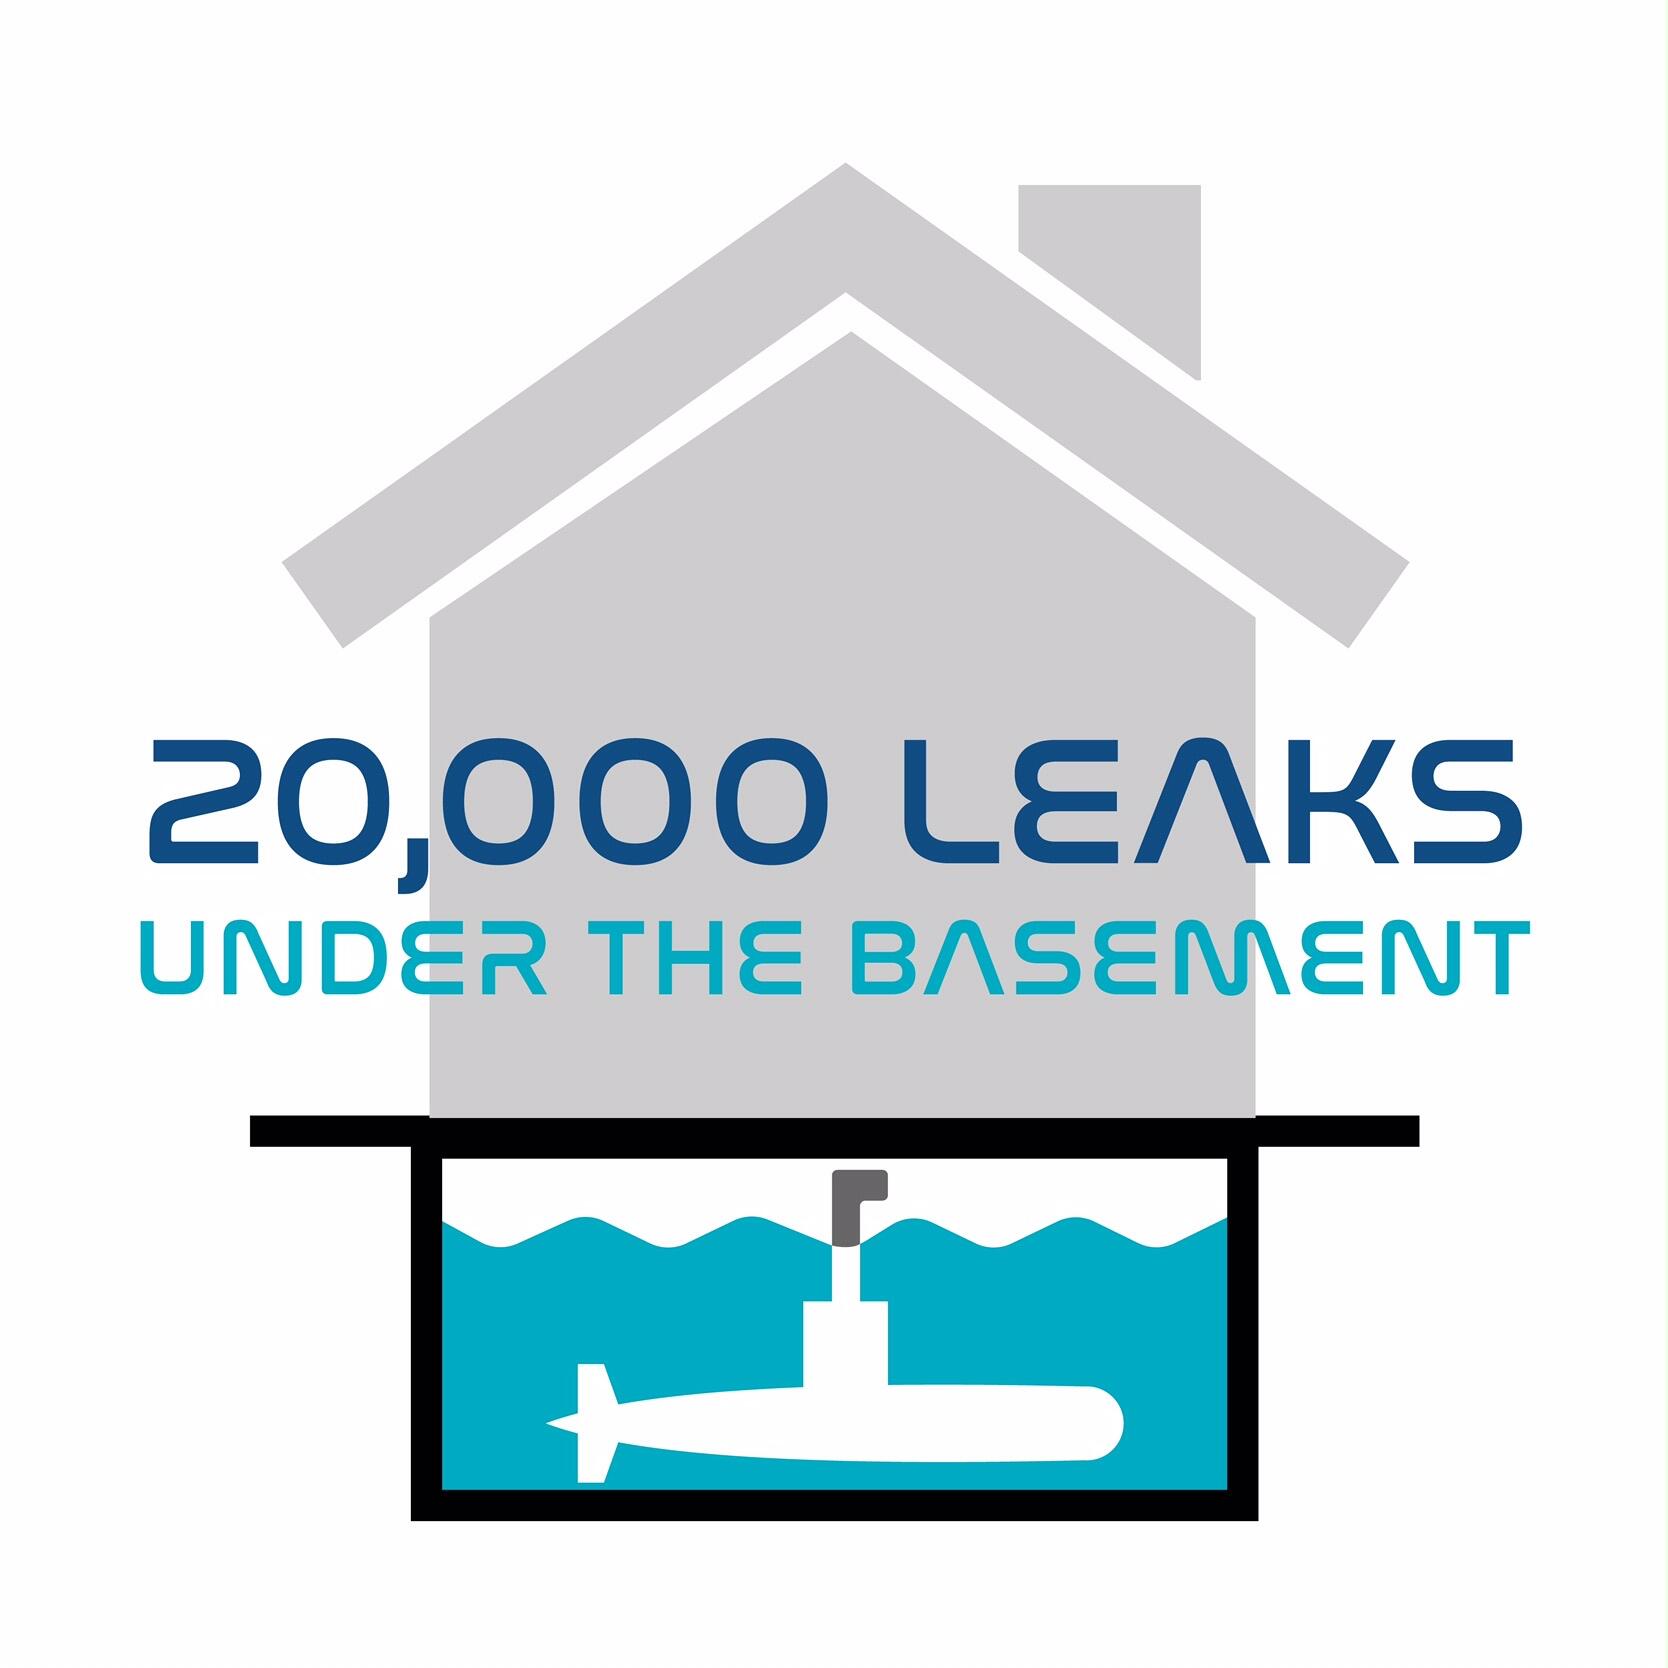 20000 Leaks Under the Basement - 6 Recommendations ...